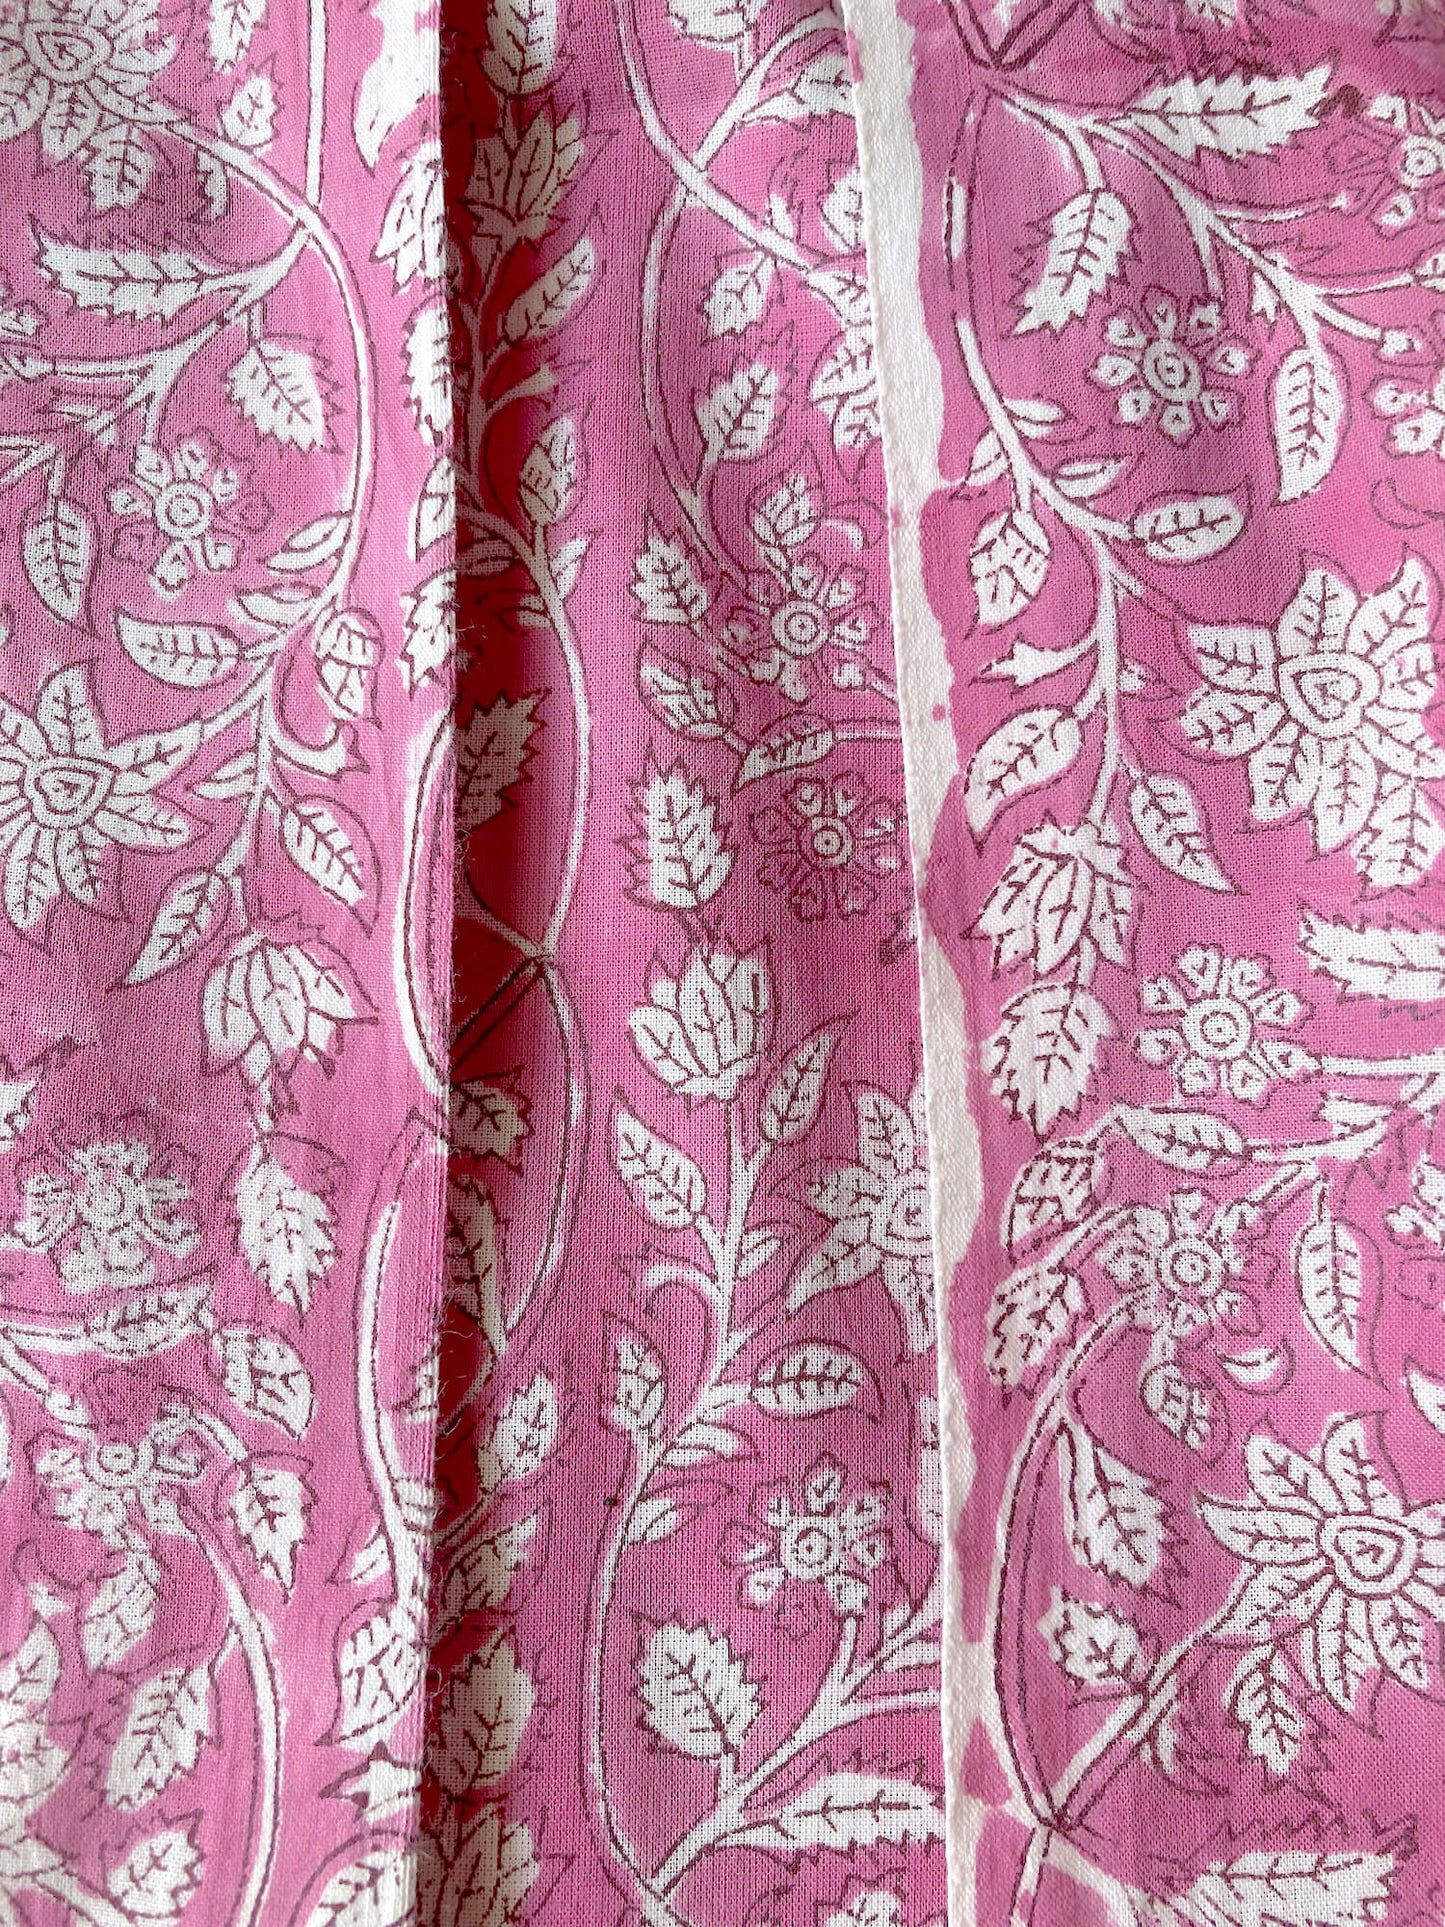 Hand Block Printed Cotton Fabric  Pink #174-25